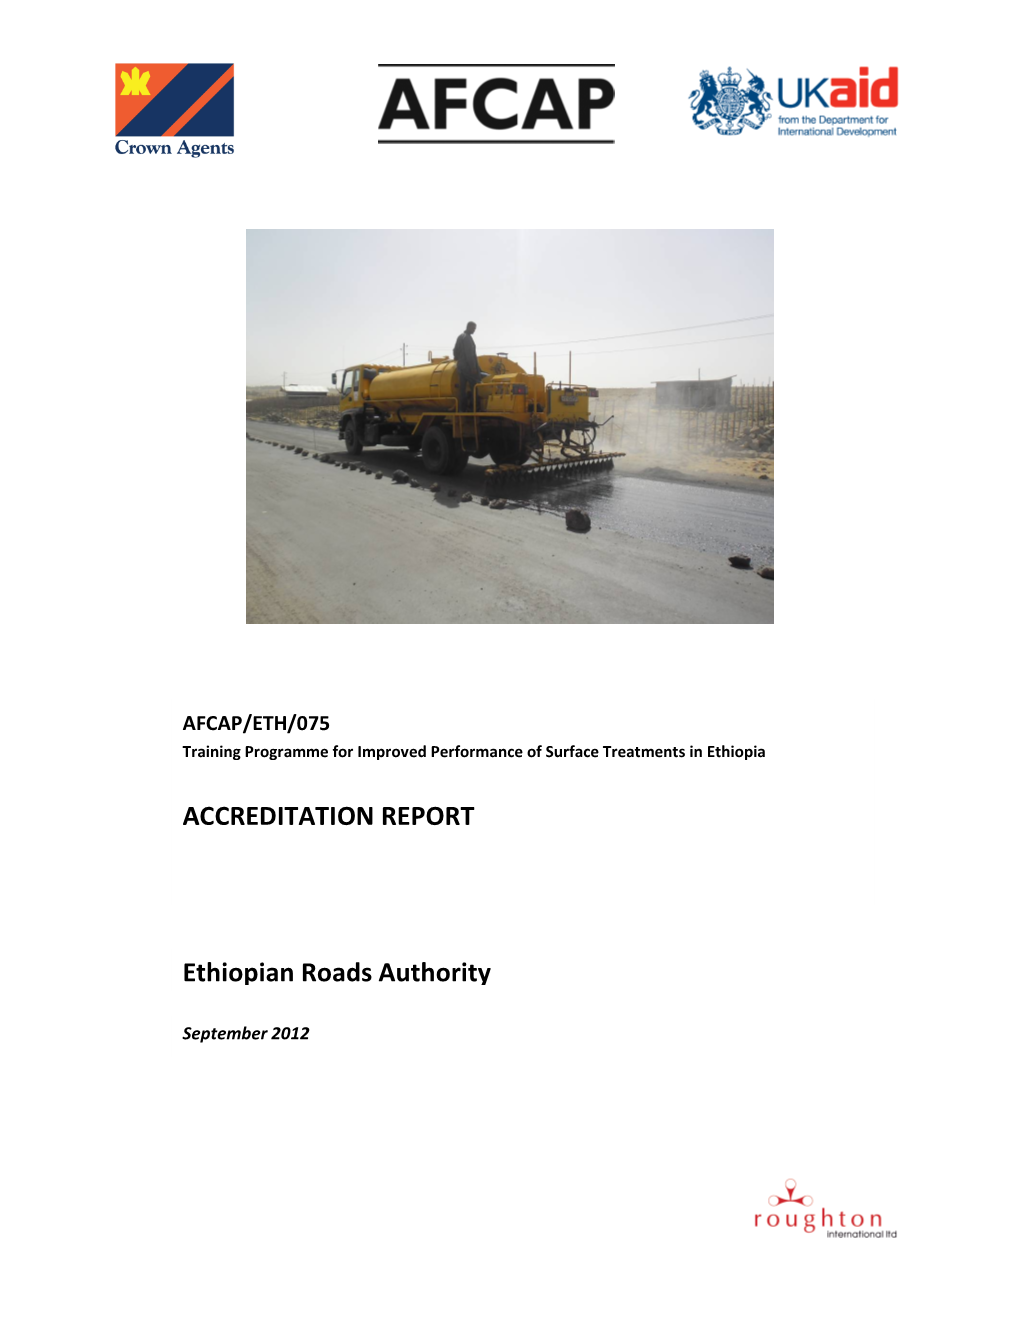 ACCREDITATION REPORT Ethiopian Roads Authority